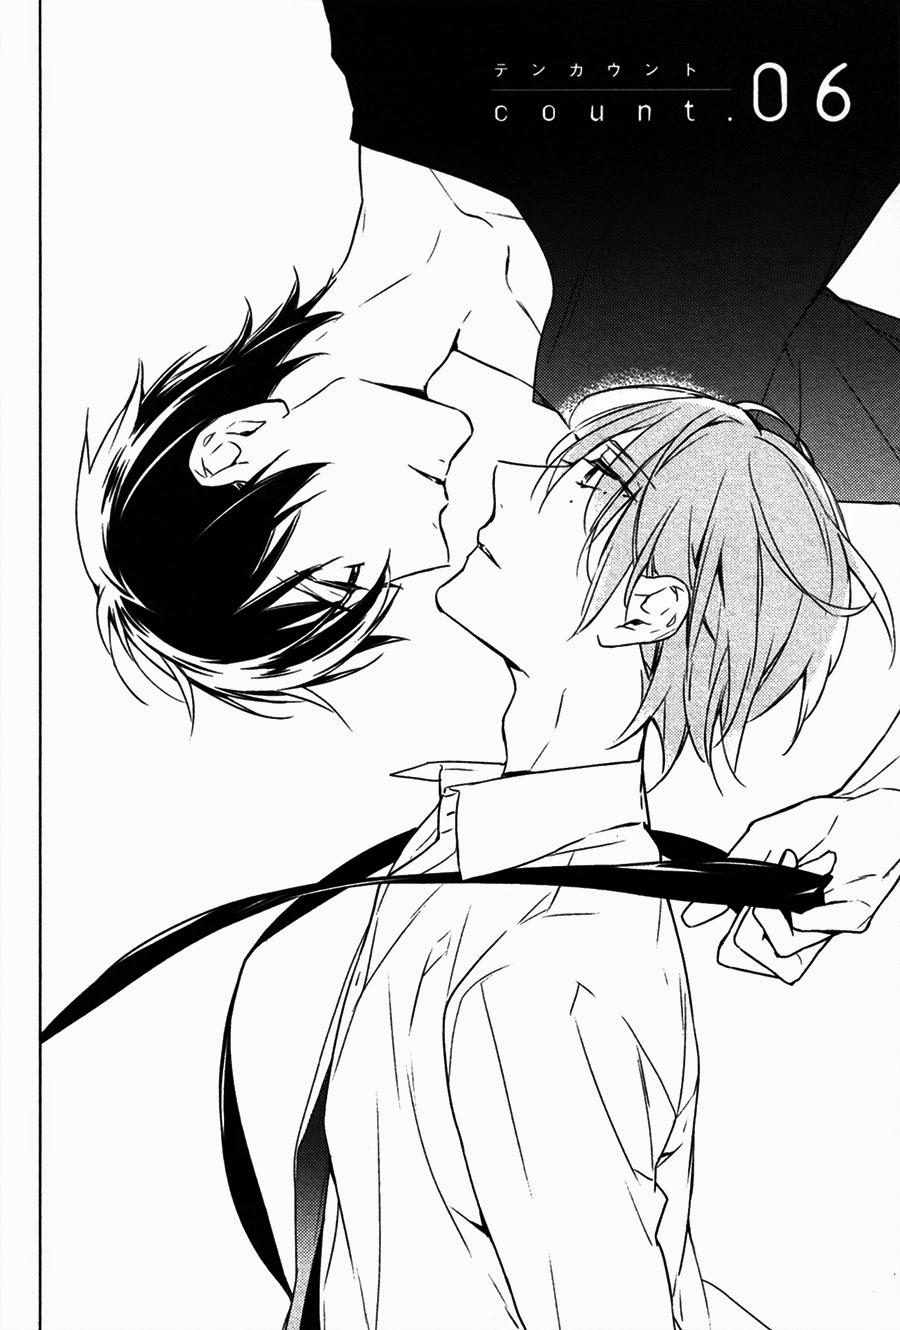 Манга яой переводы. Куросе Рику и Широтани Тадаоми поцелуй. Manga Yaoi до десяти. Тадаоми Широтани поцелуй. Яой Манга до десяти поцелуй.